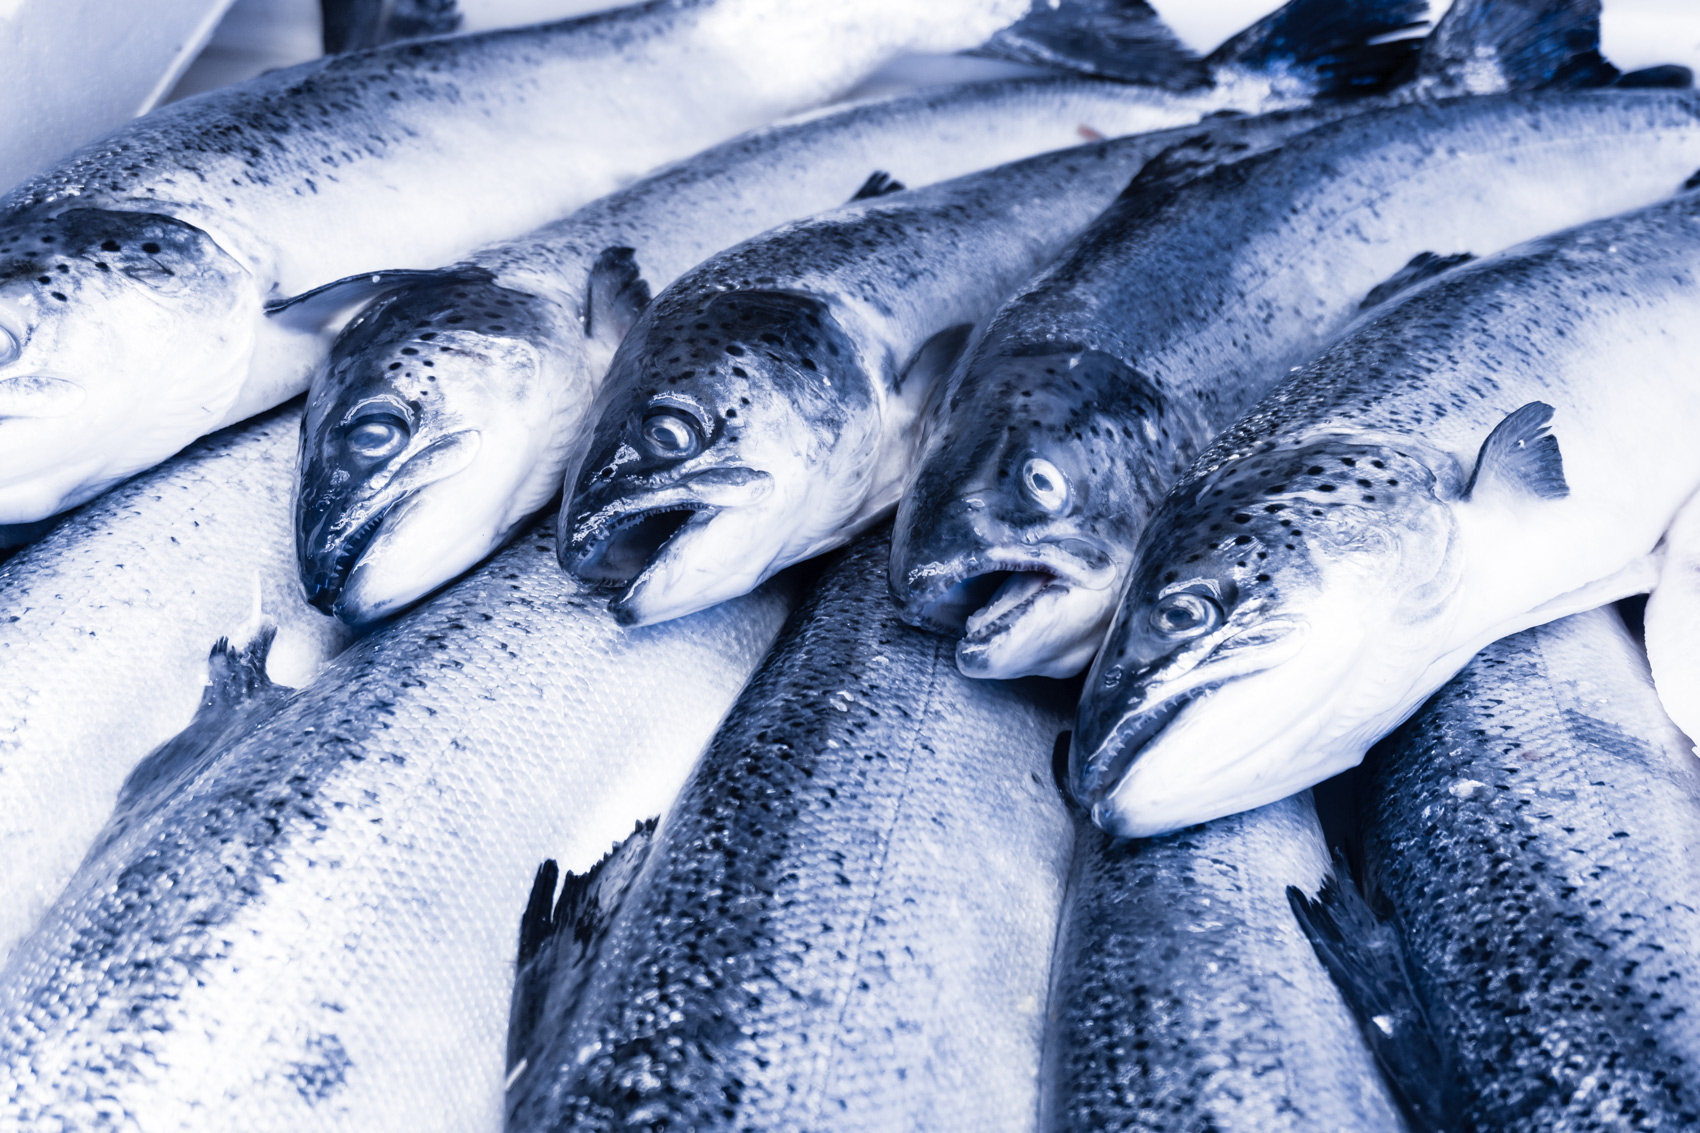 fresh-seafood-fresh-fish-in-the-market-PWCSZ48.jpg